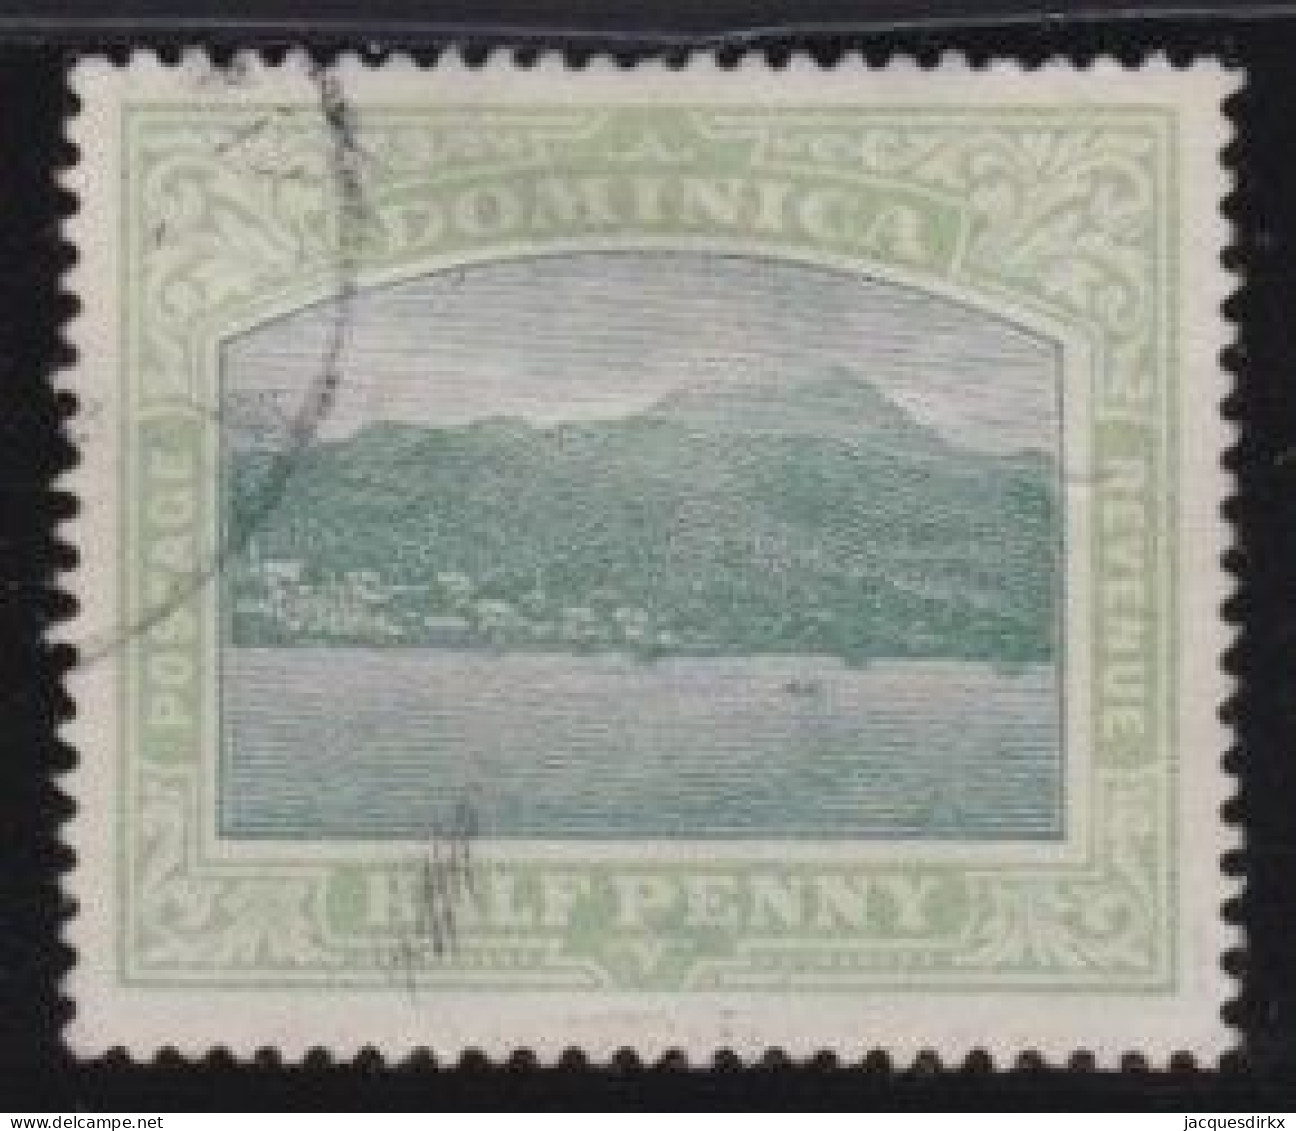 Dominica     .   SG    .  27a       .     O     .    Cancelled - Dominica (...-1978)